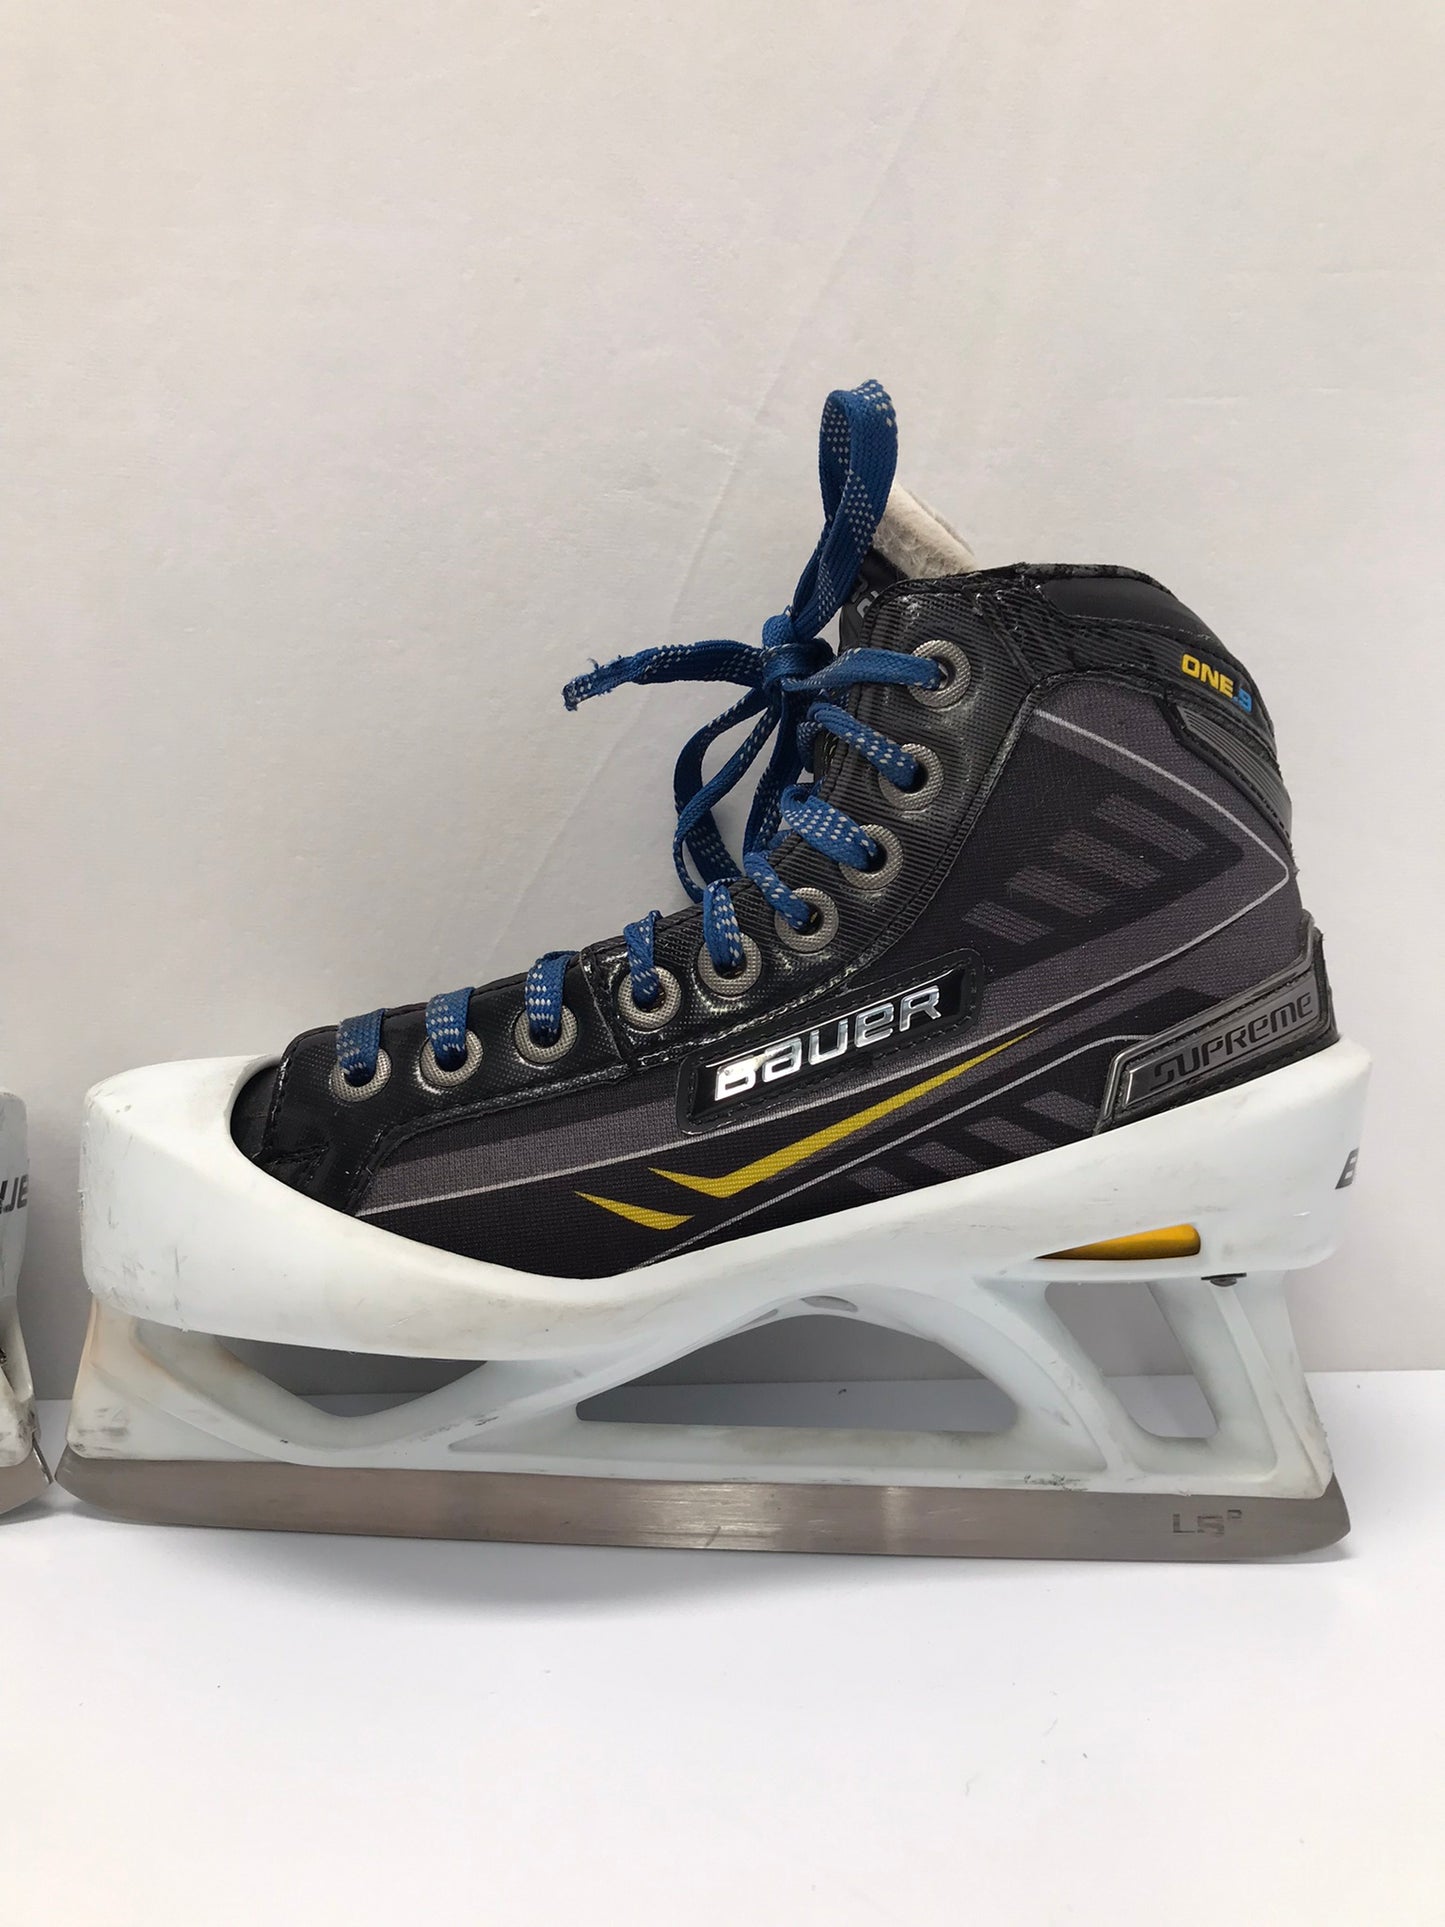 Hockey Goalie Skates Child Size 5.5 Shoe Size Bauer Supreme Excellent